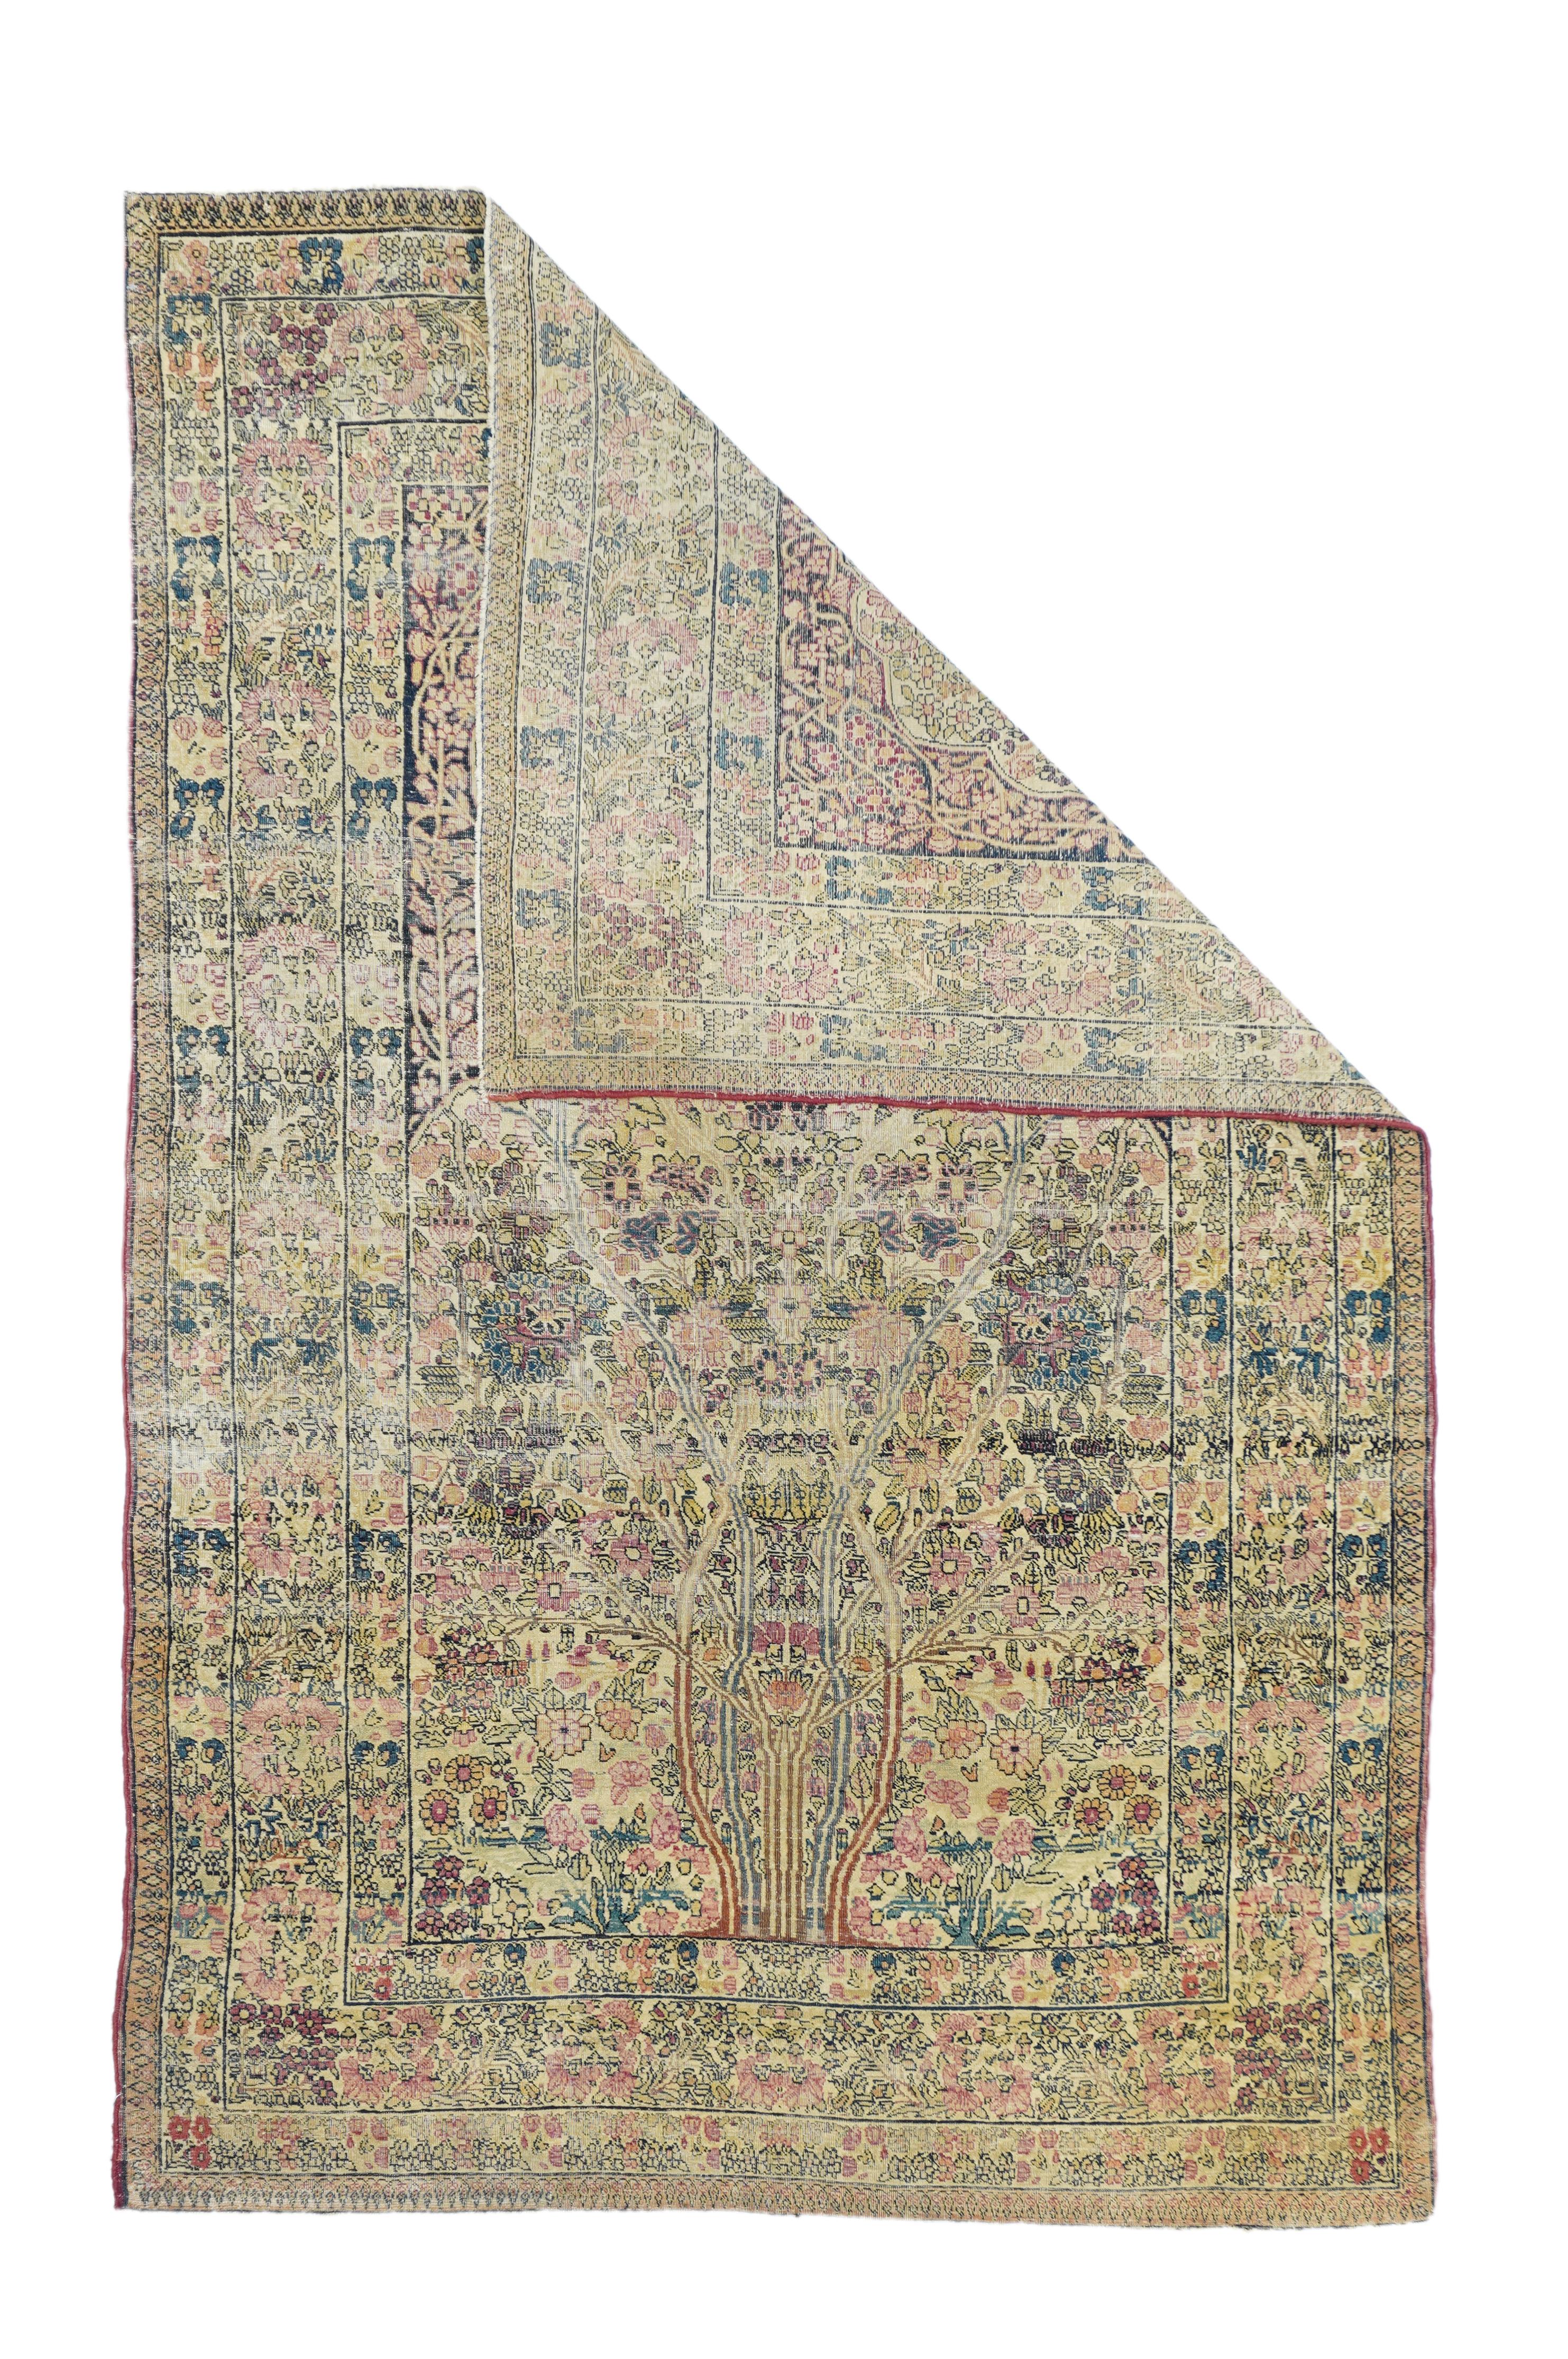 Antique Kerman rug 4'3'' x 6'9''. Two symmetric 